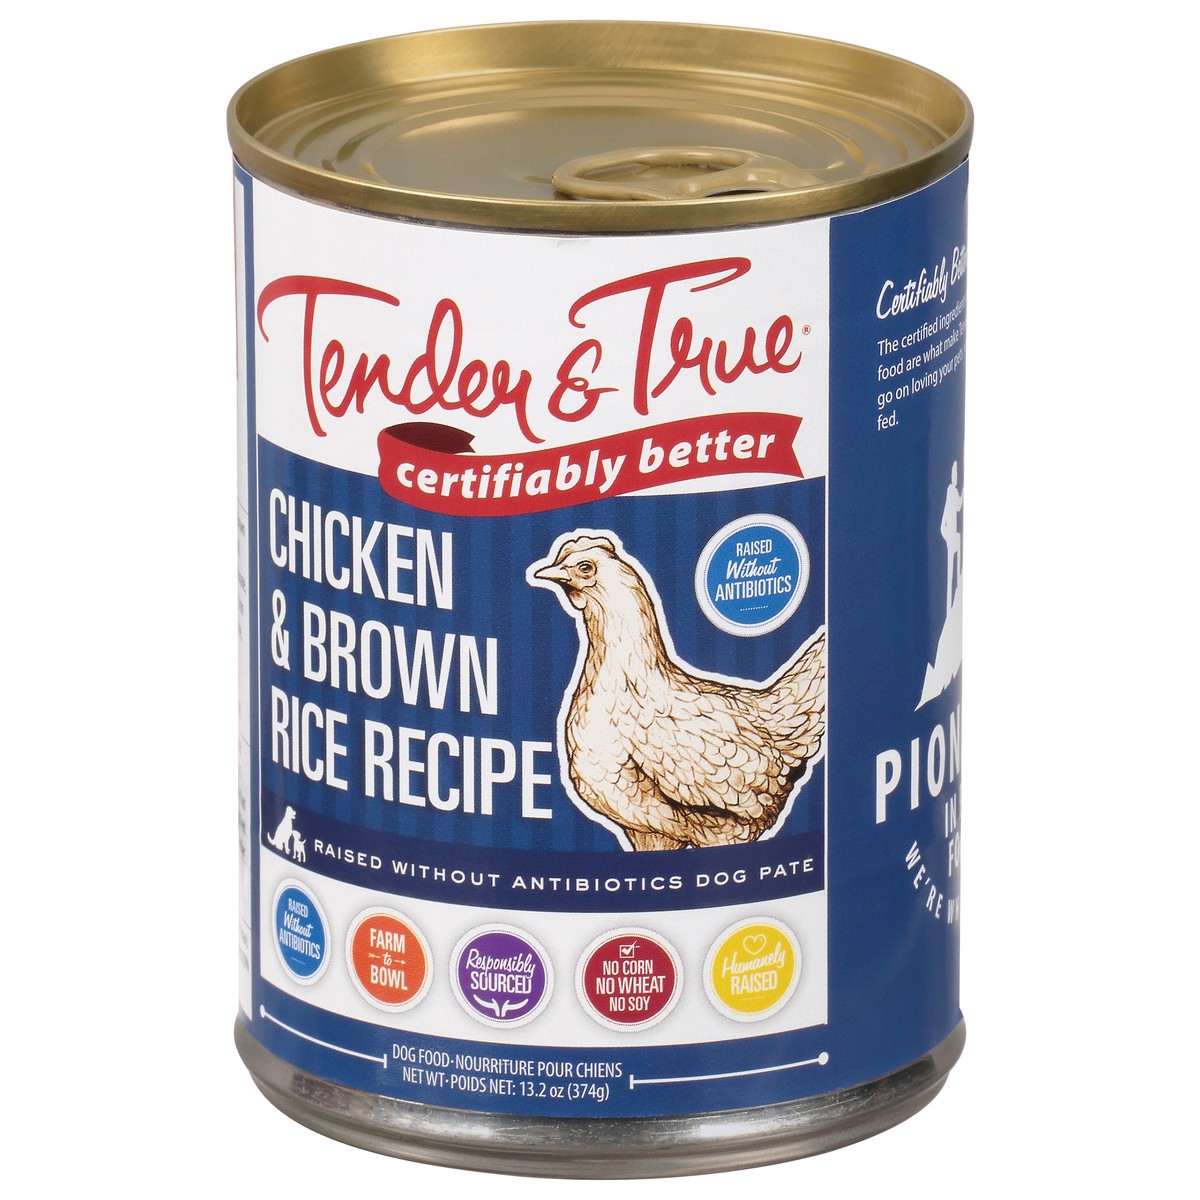 slide 5 of 14, Tender & True Chicken & Brown Rice Recipe Dog Food Pate 13.2 oz, 13.2 oz